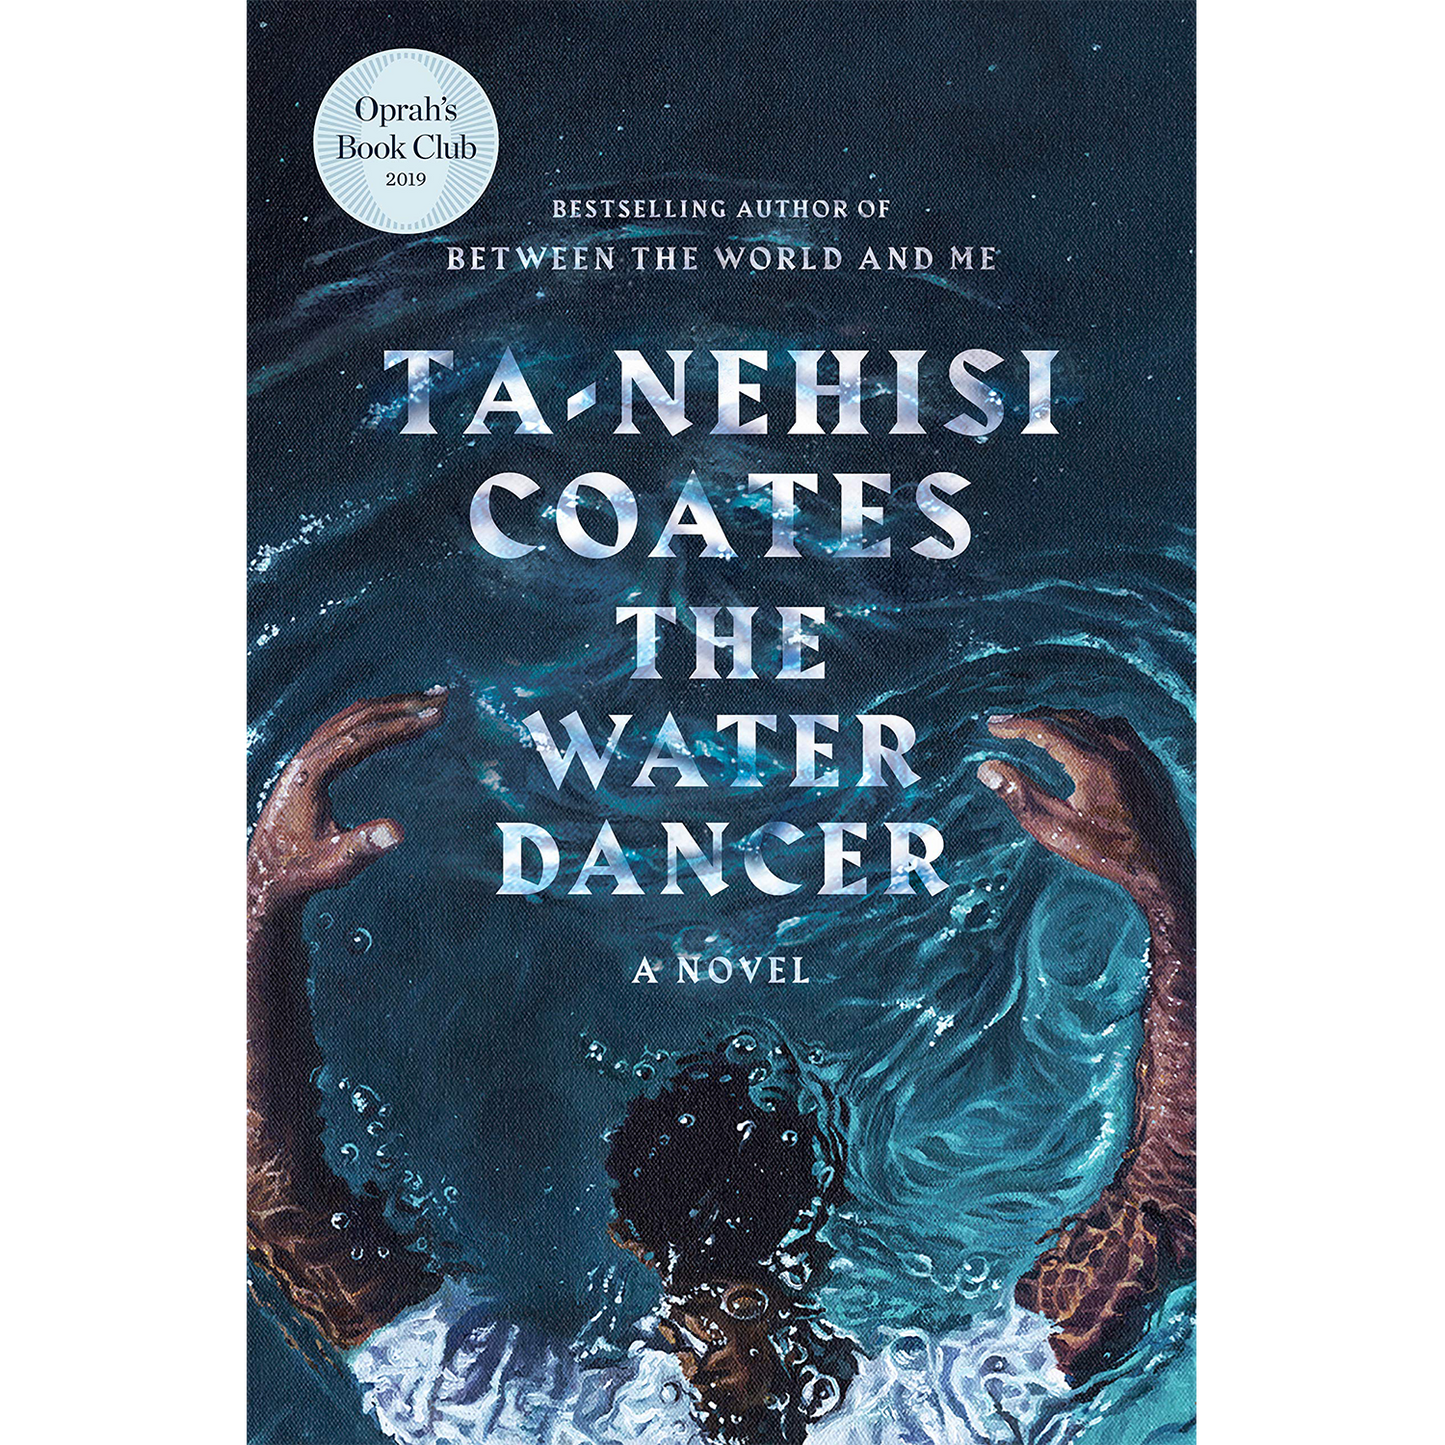 The Water Dancer (paperback): A Novel